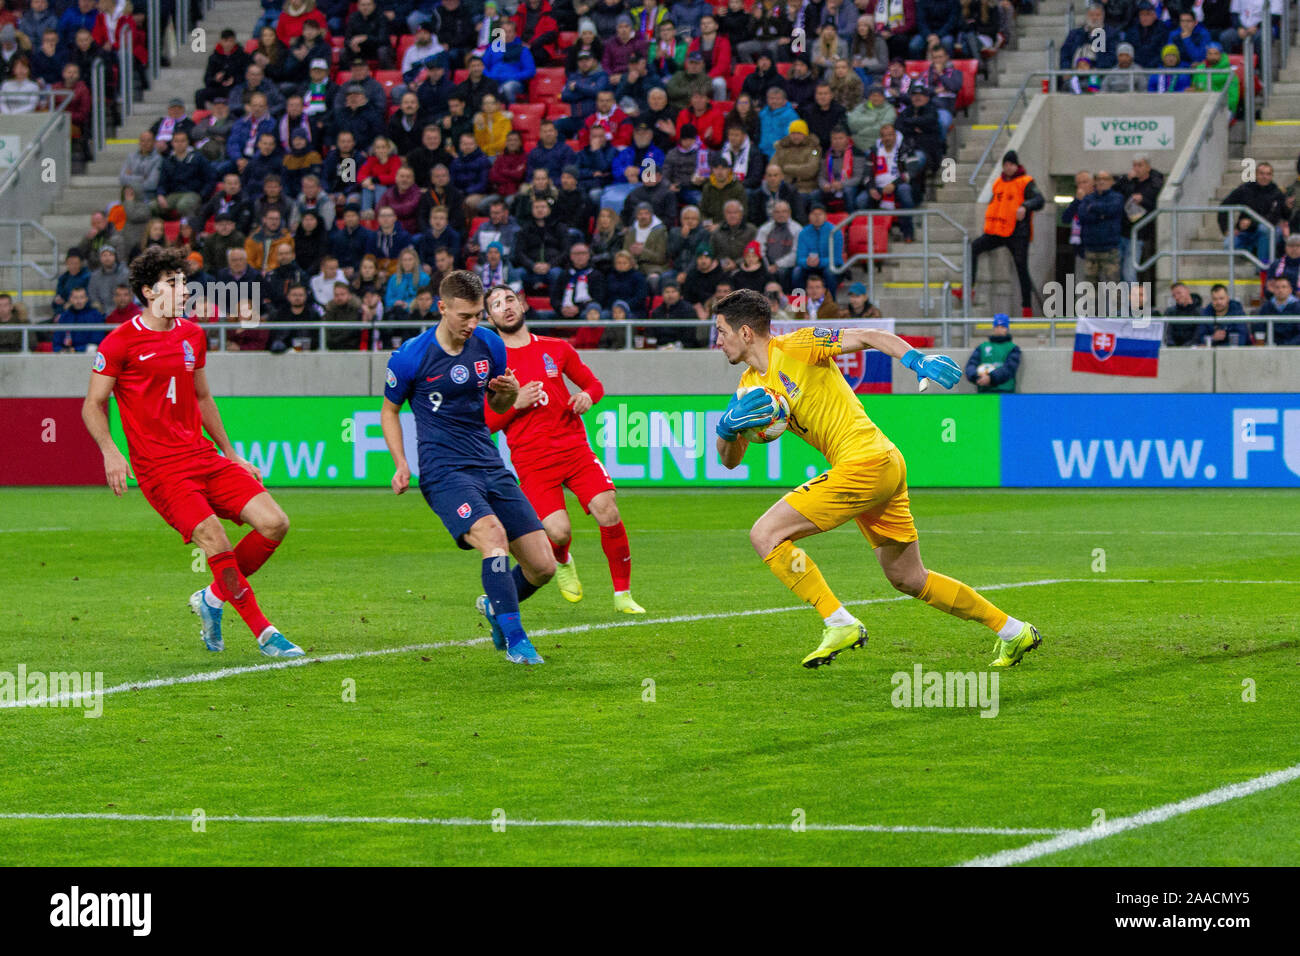 Trnava, Slovakia. 19th November, 2019. The goalkeeper Emil Balayev in action during the Euro 2020 qualifier between Slovakia and Azerbaijan. Stock Photo